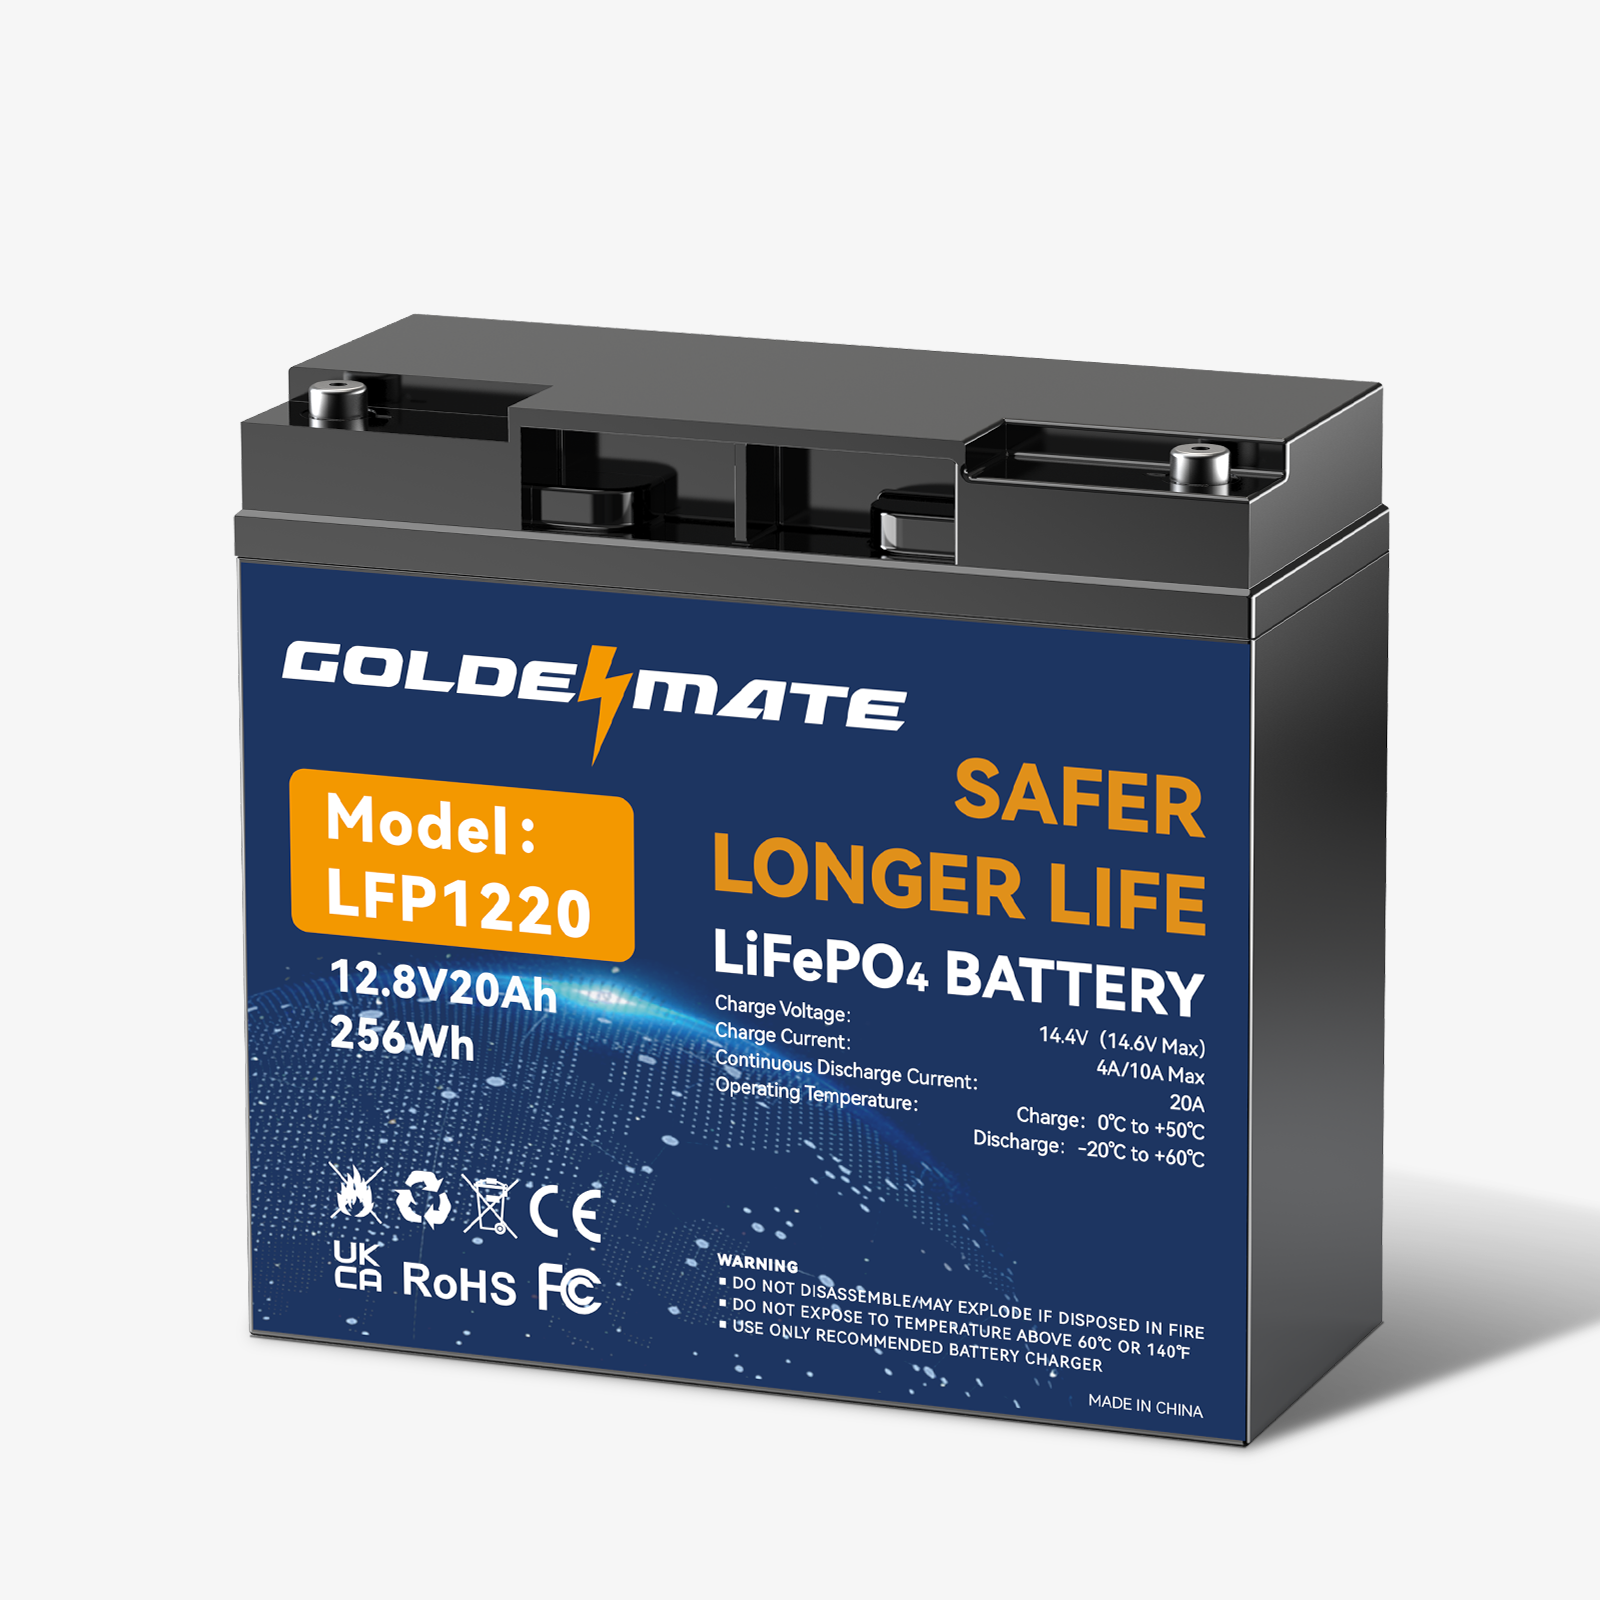 GoldenMate 12V 20Ah LiFePO4 Lithium Battery, 256Wh Energy, Built-in BMS